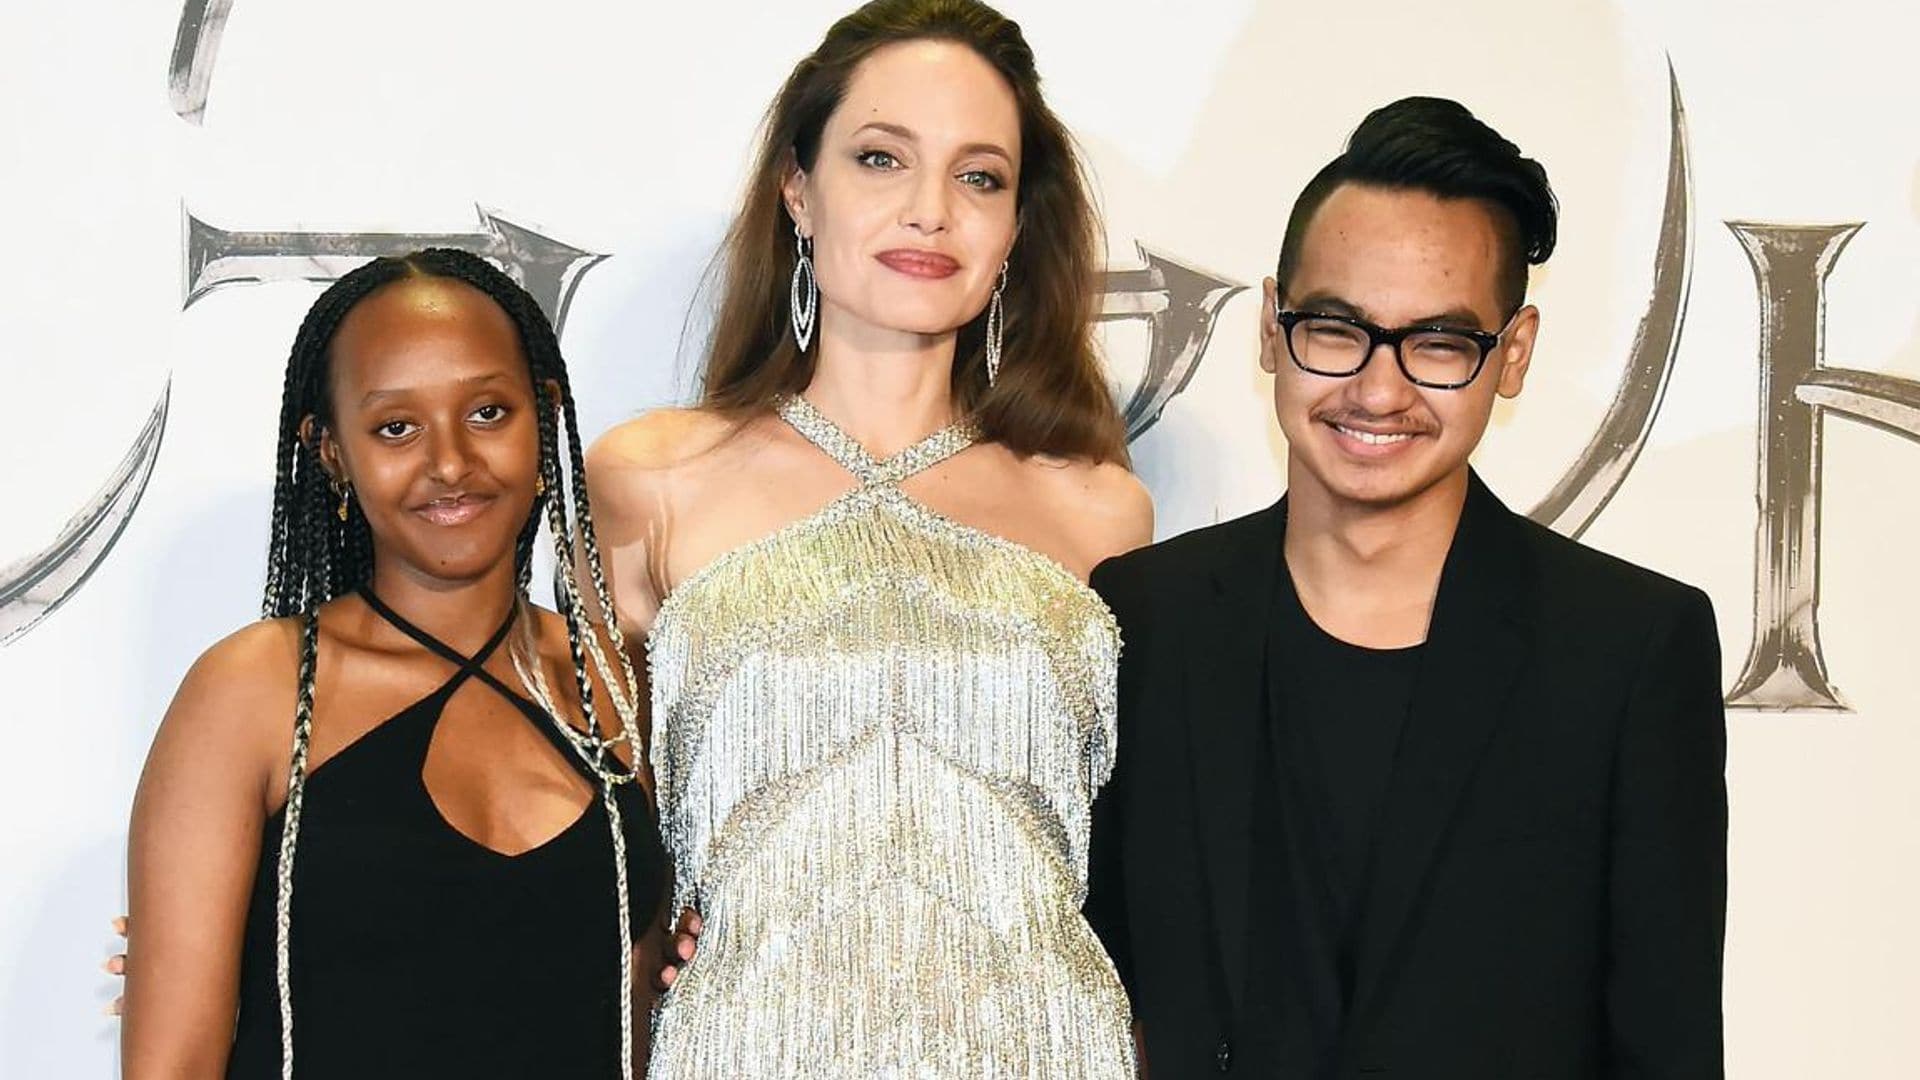 Angelina Jolie, Maddox reunite at Maleficent premiere in Tokyo